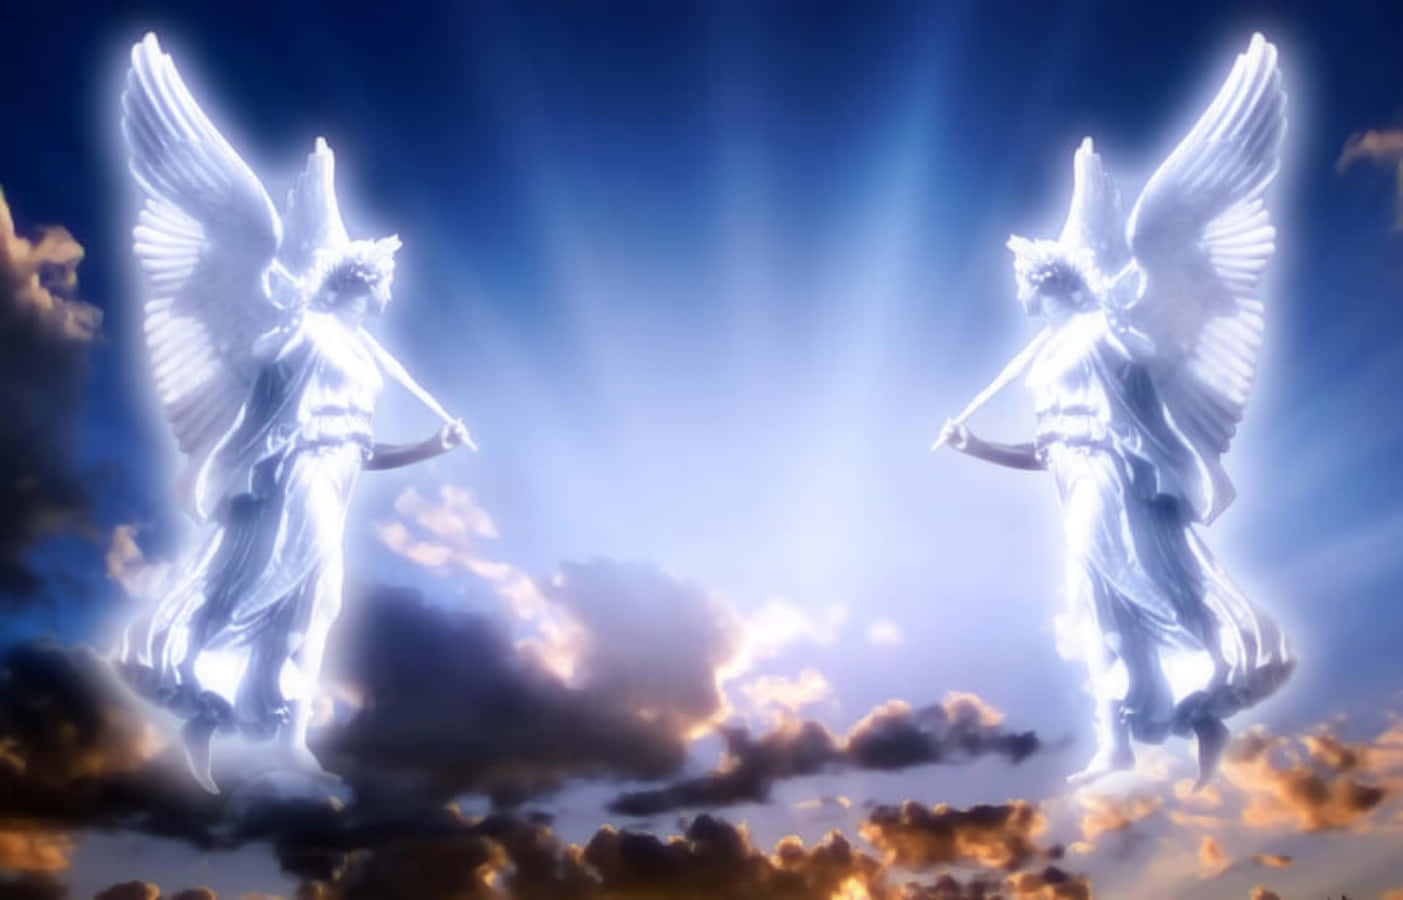 "Heaven Sent: Angels of God Bring Protection"